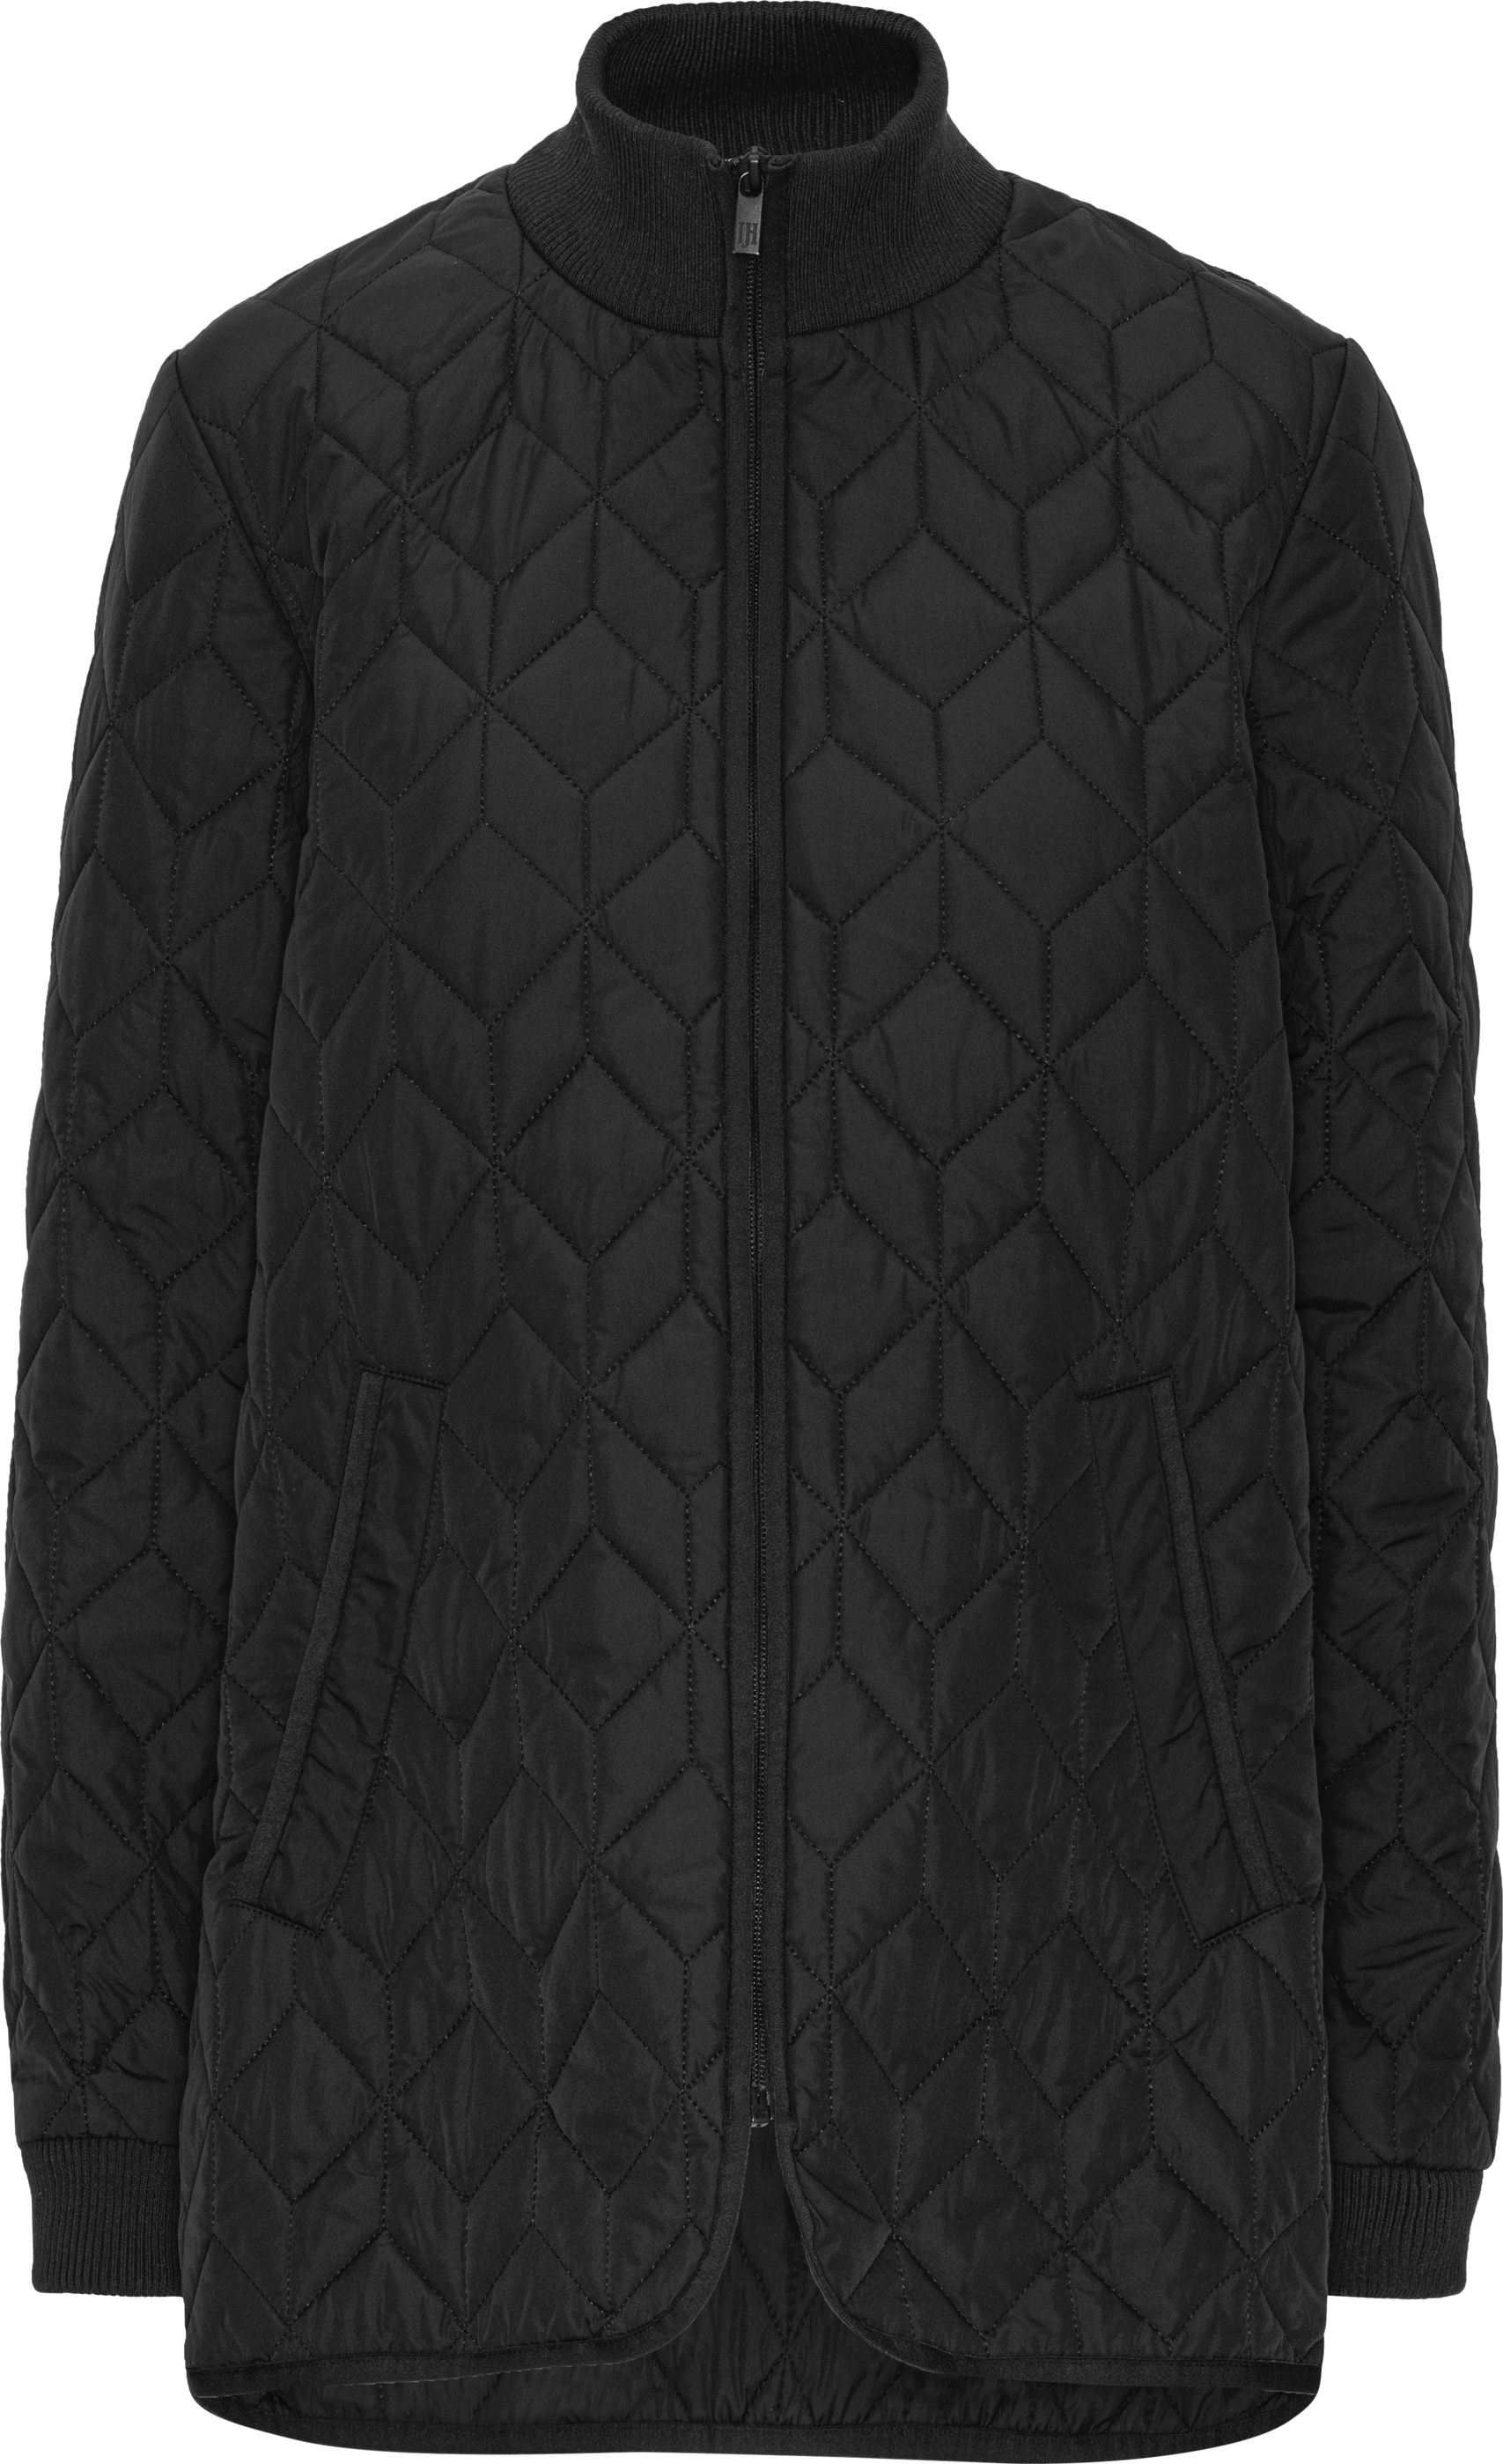 Ilse Jacobsen Women’s Quilt Jacket Black